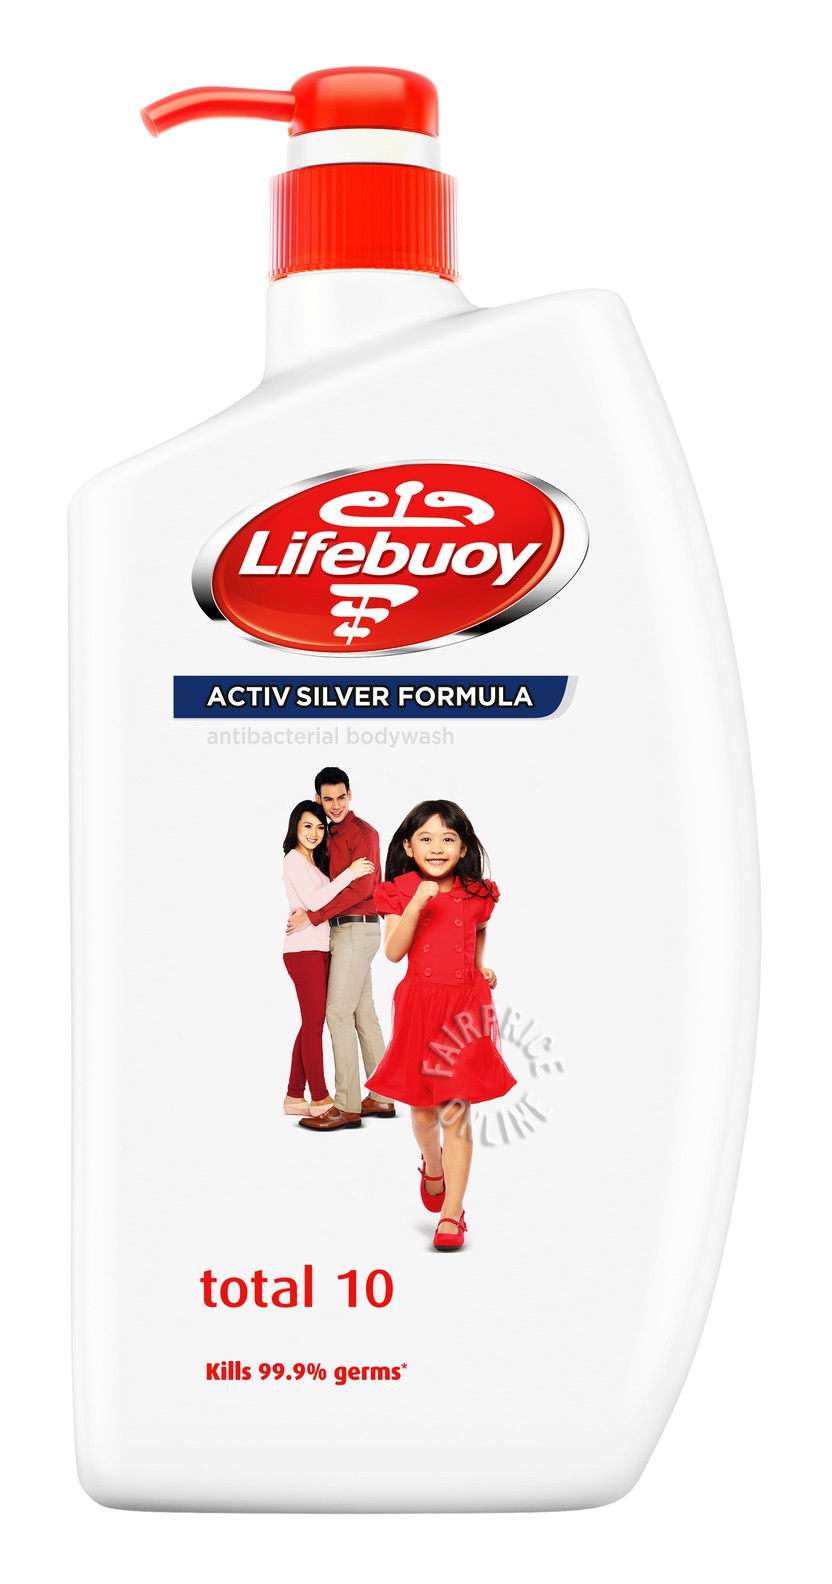 Lifebuoy Antibacterial Body Wash